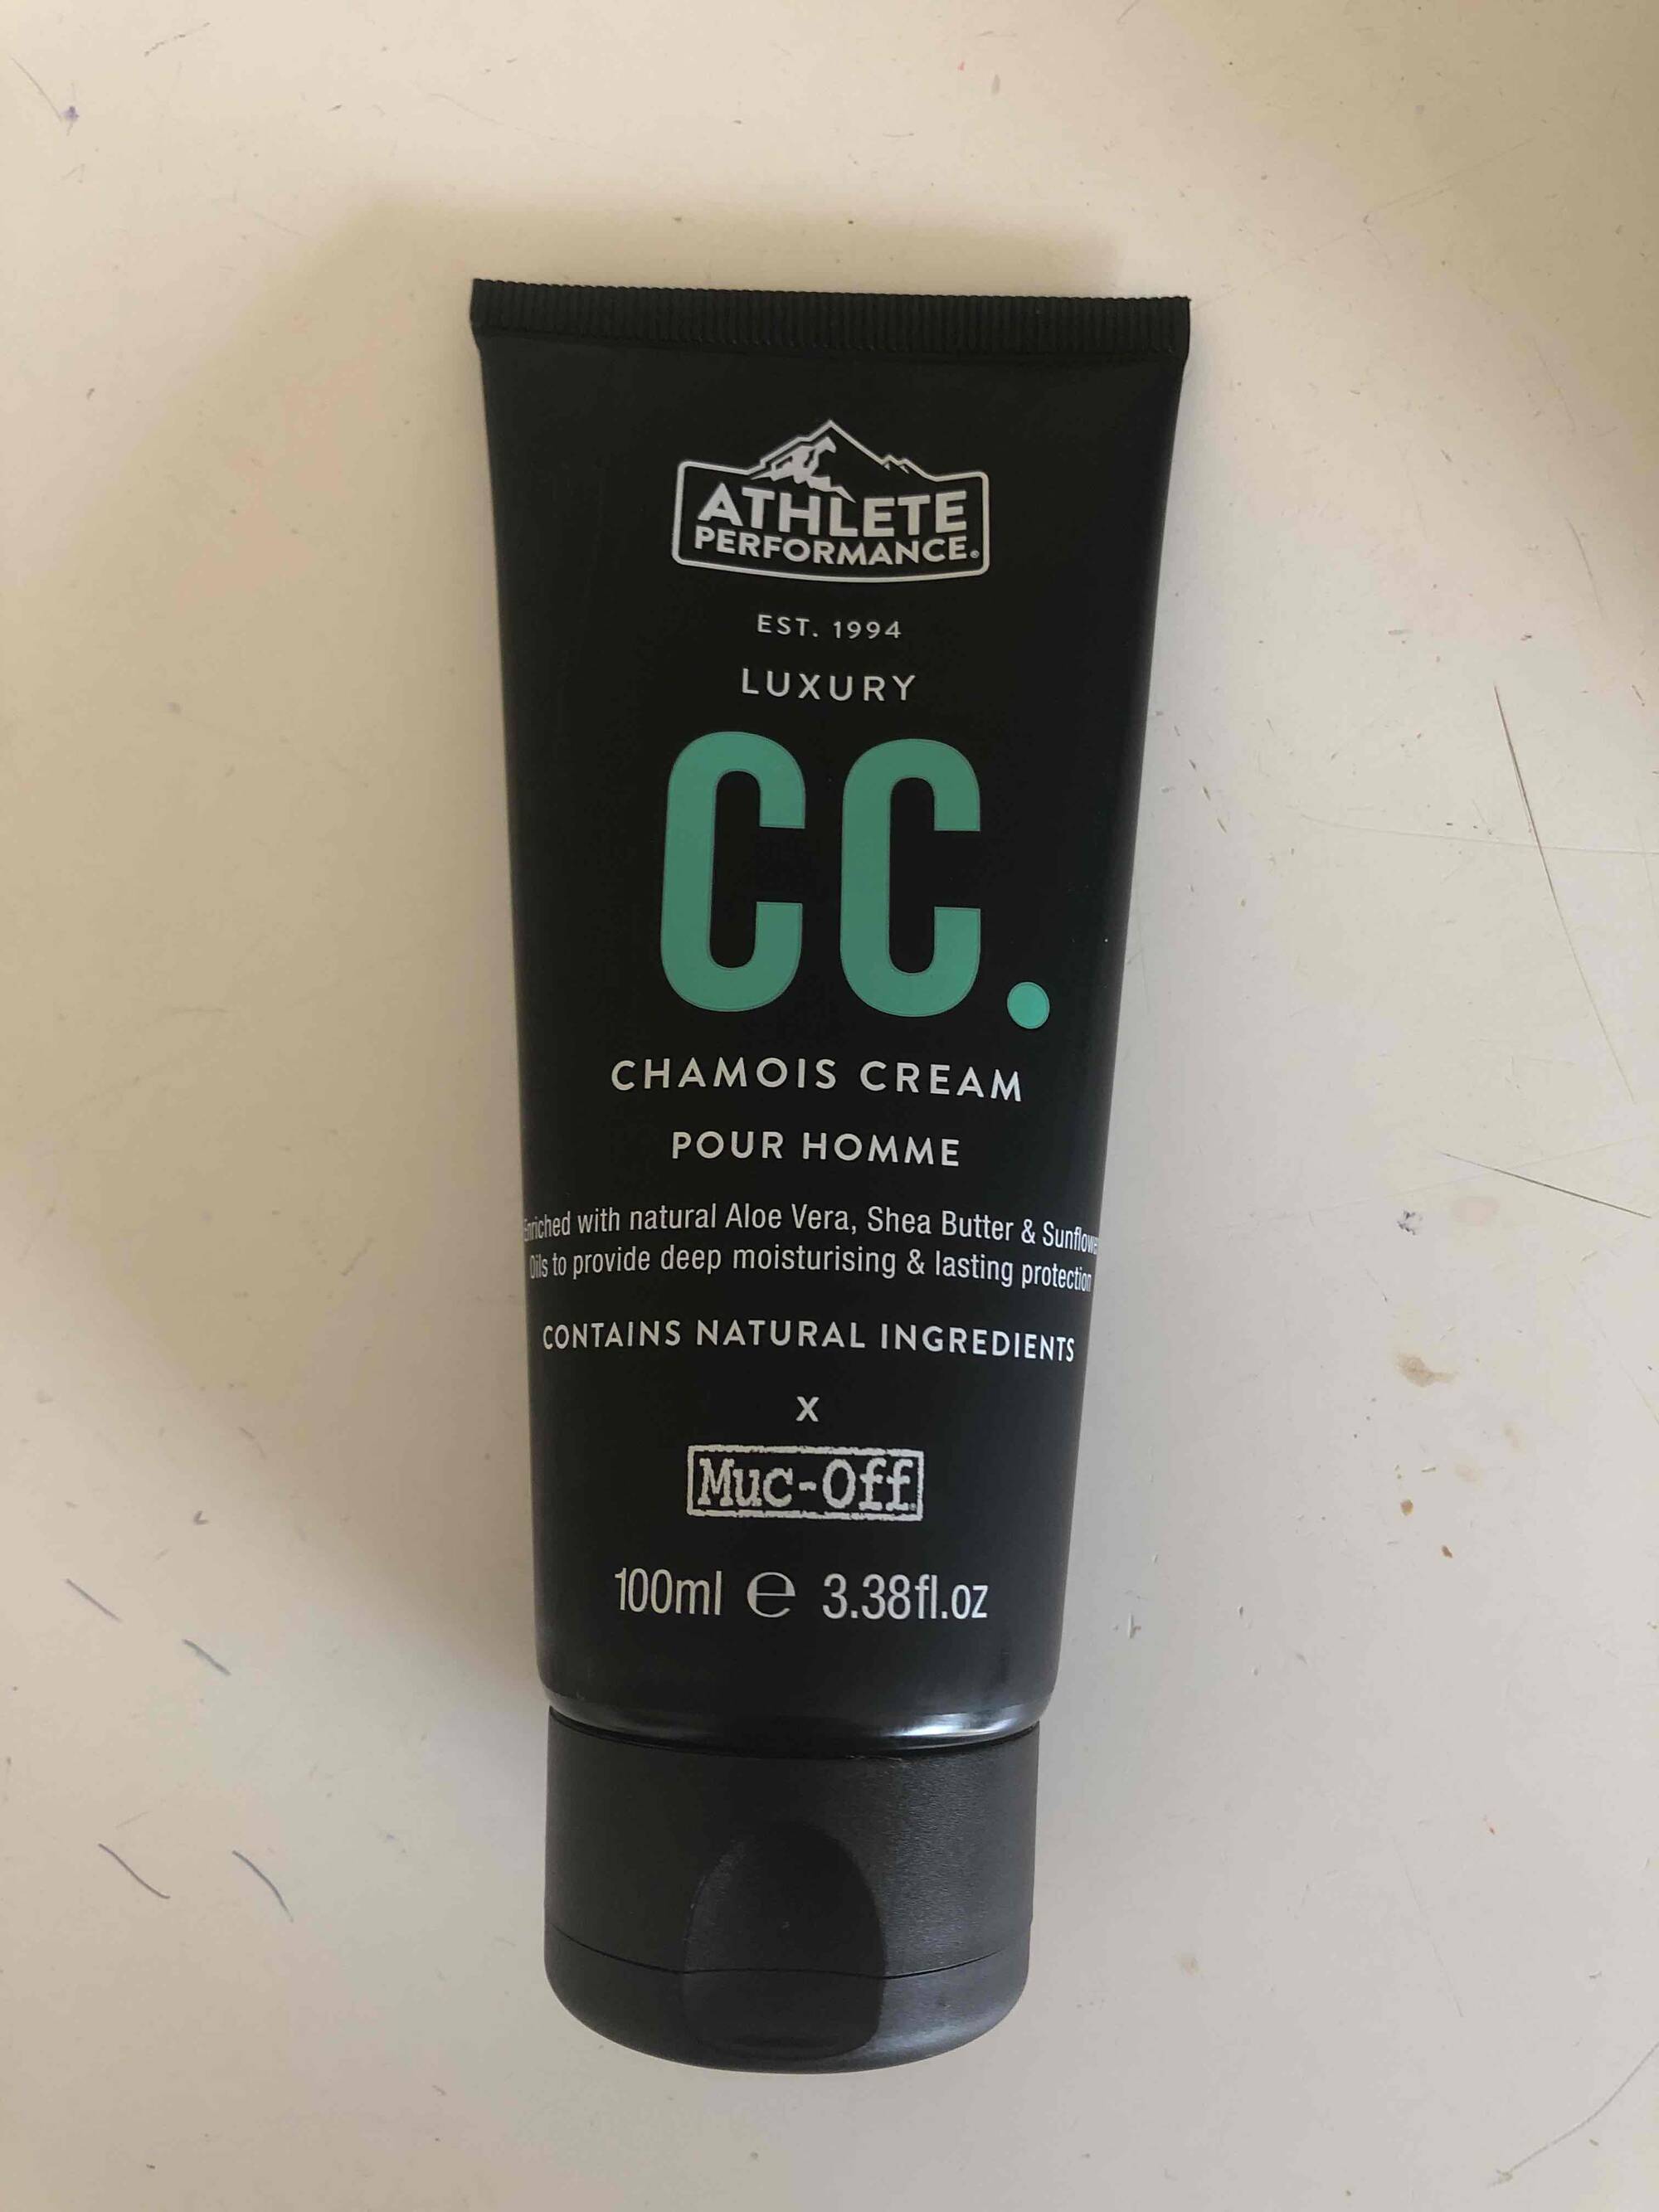 ATHLETE PERFORMANCE - Muc-off - Chamois cream 